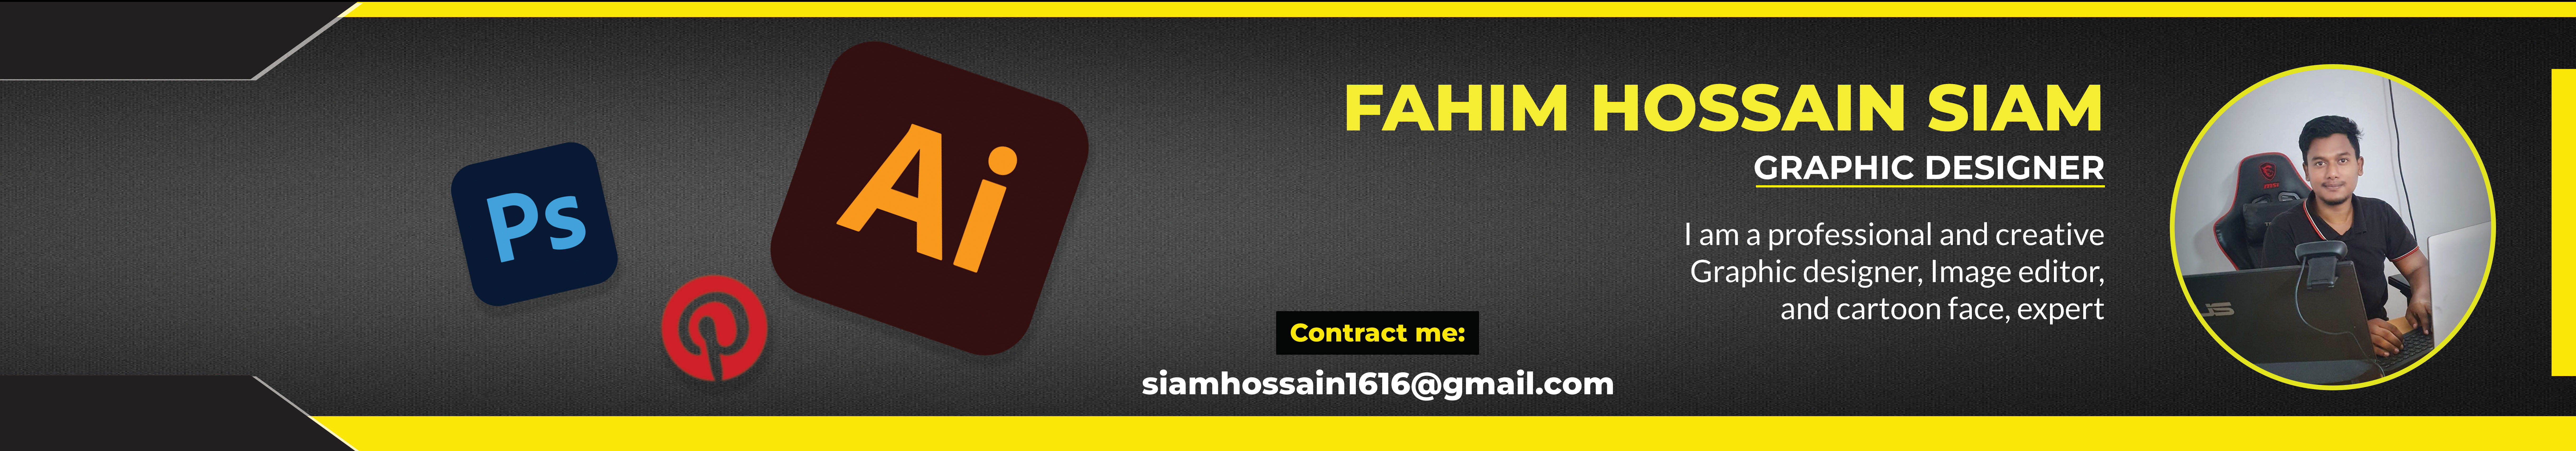 Fahim Hossain Siam's profile banner